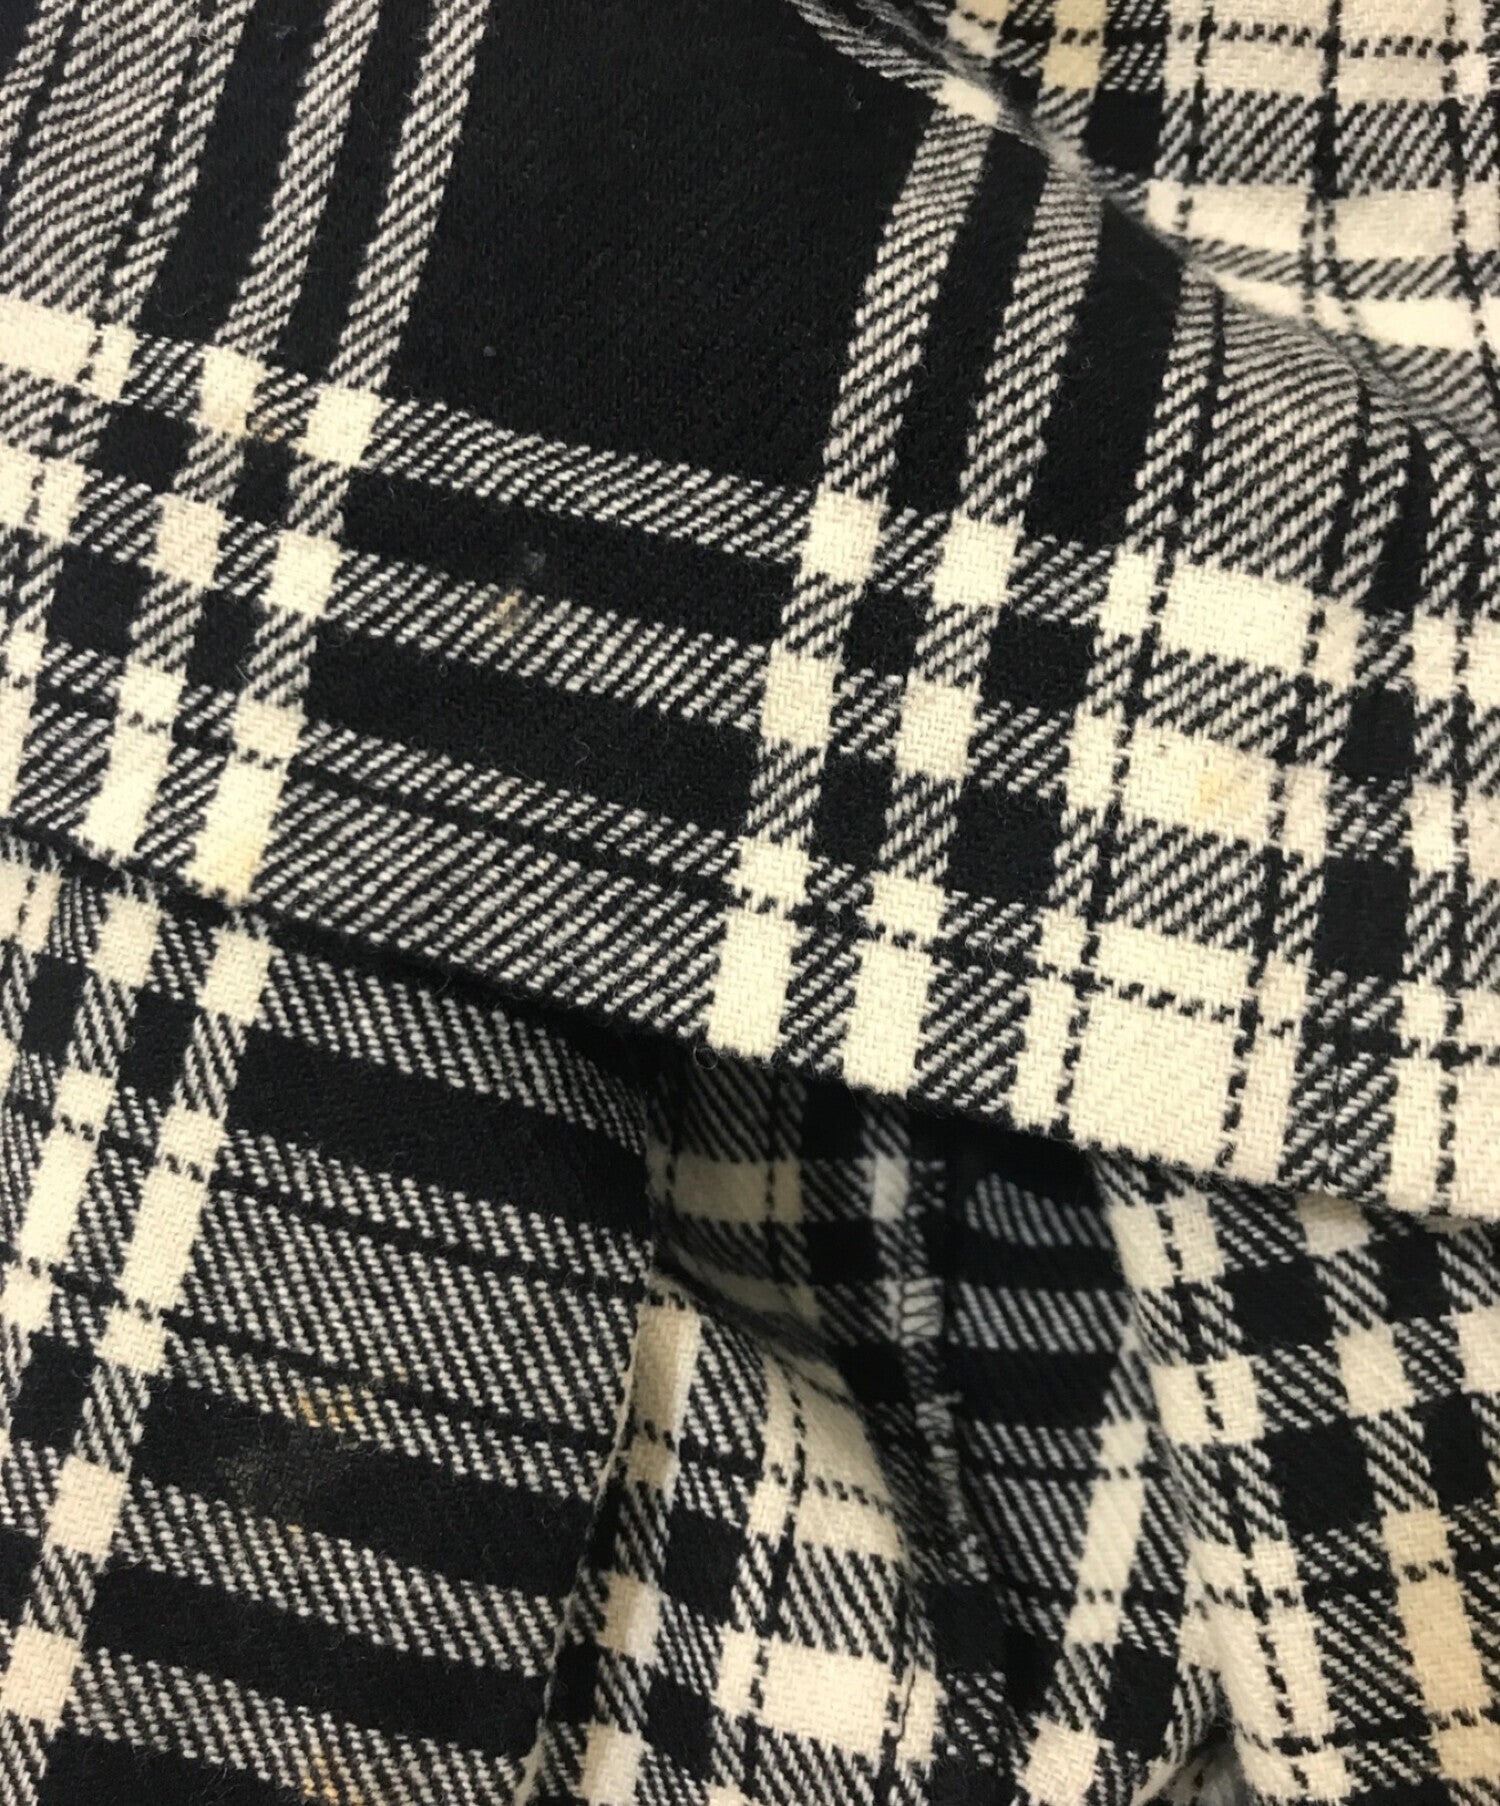 COMME des GARCONS Wool check skirt pants GP-040280 | Archive Factory